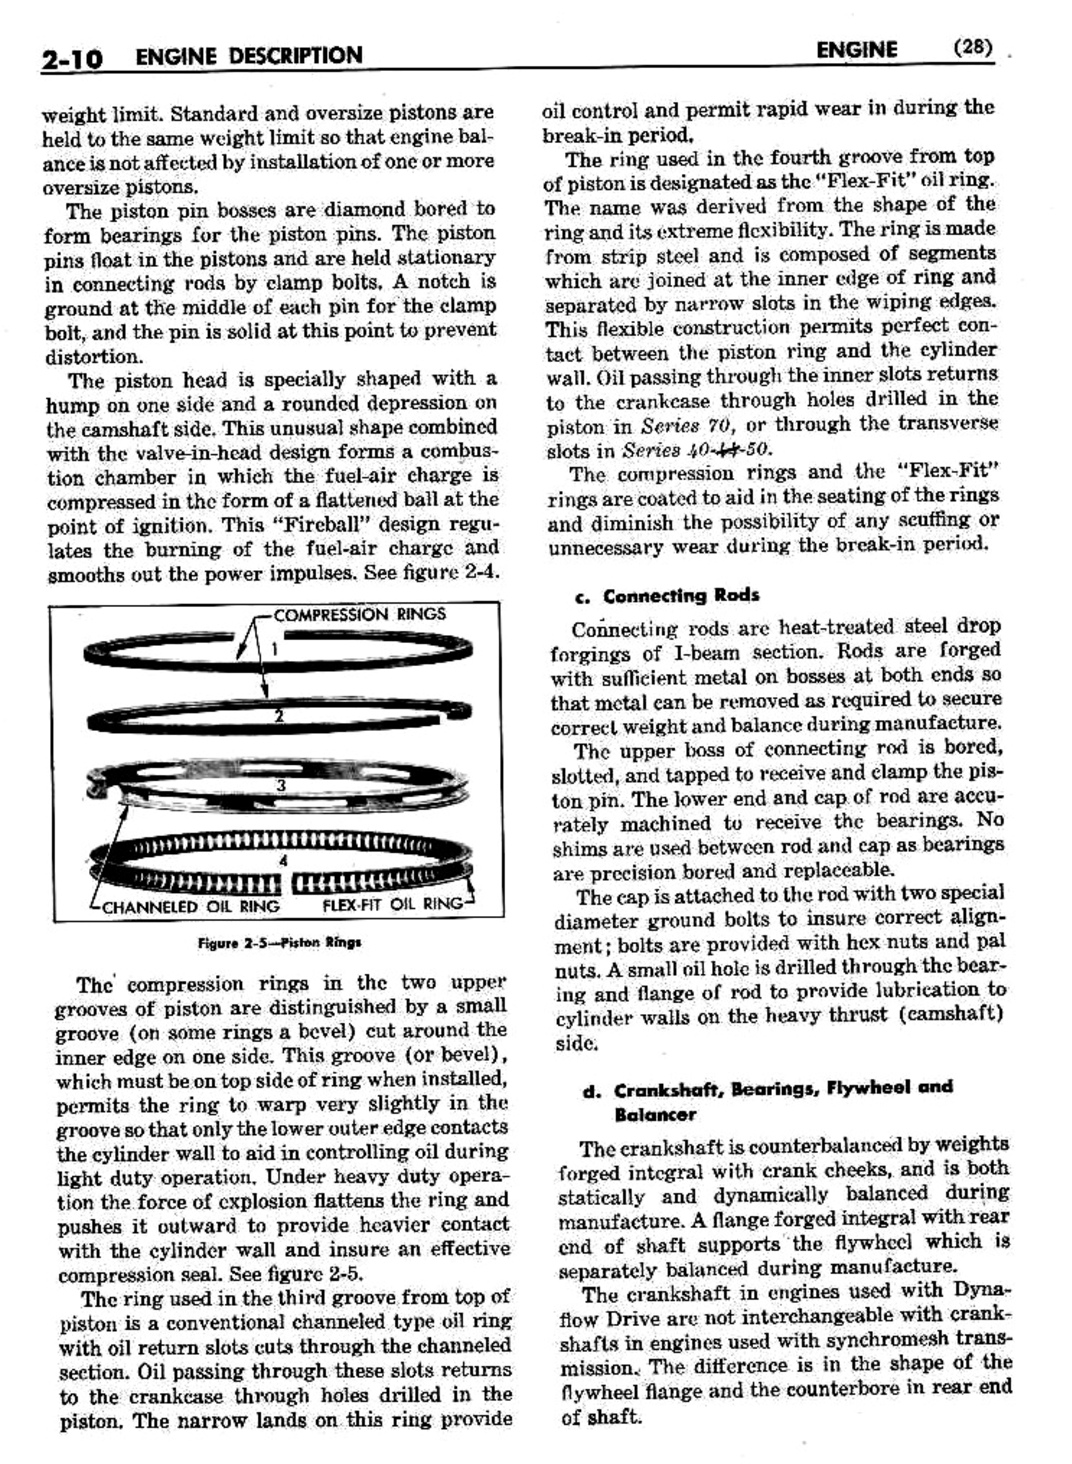 n_03 1951 Buick Shop Manual - Engine-010-010.jpg